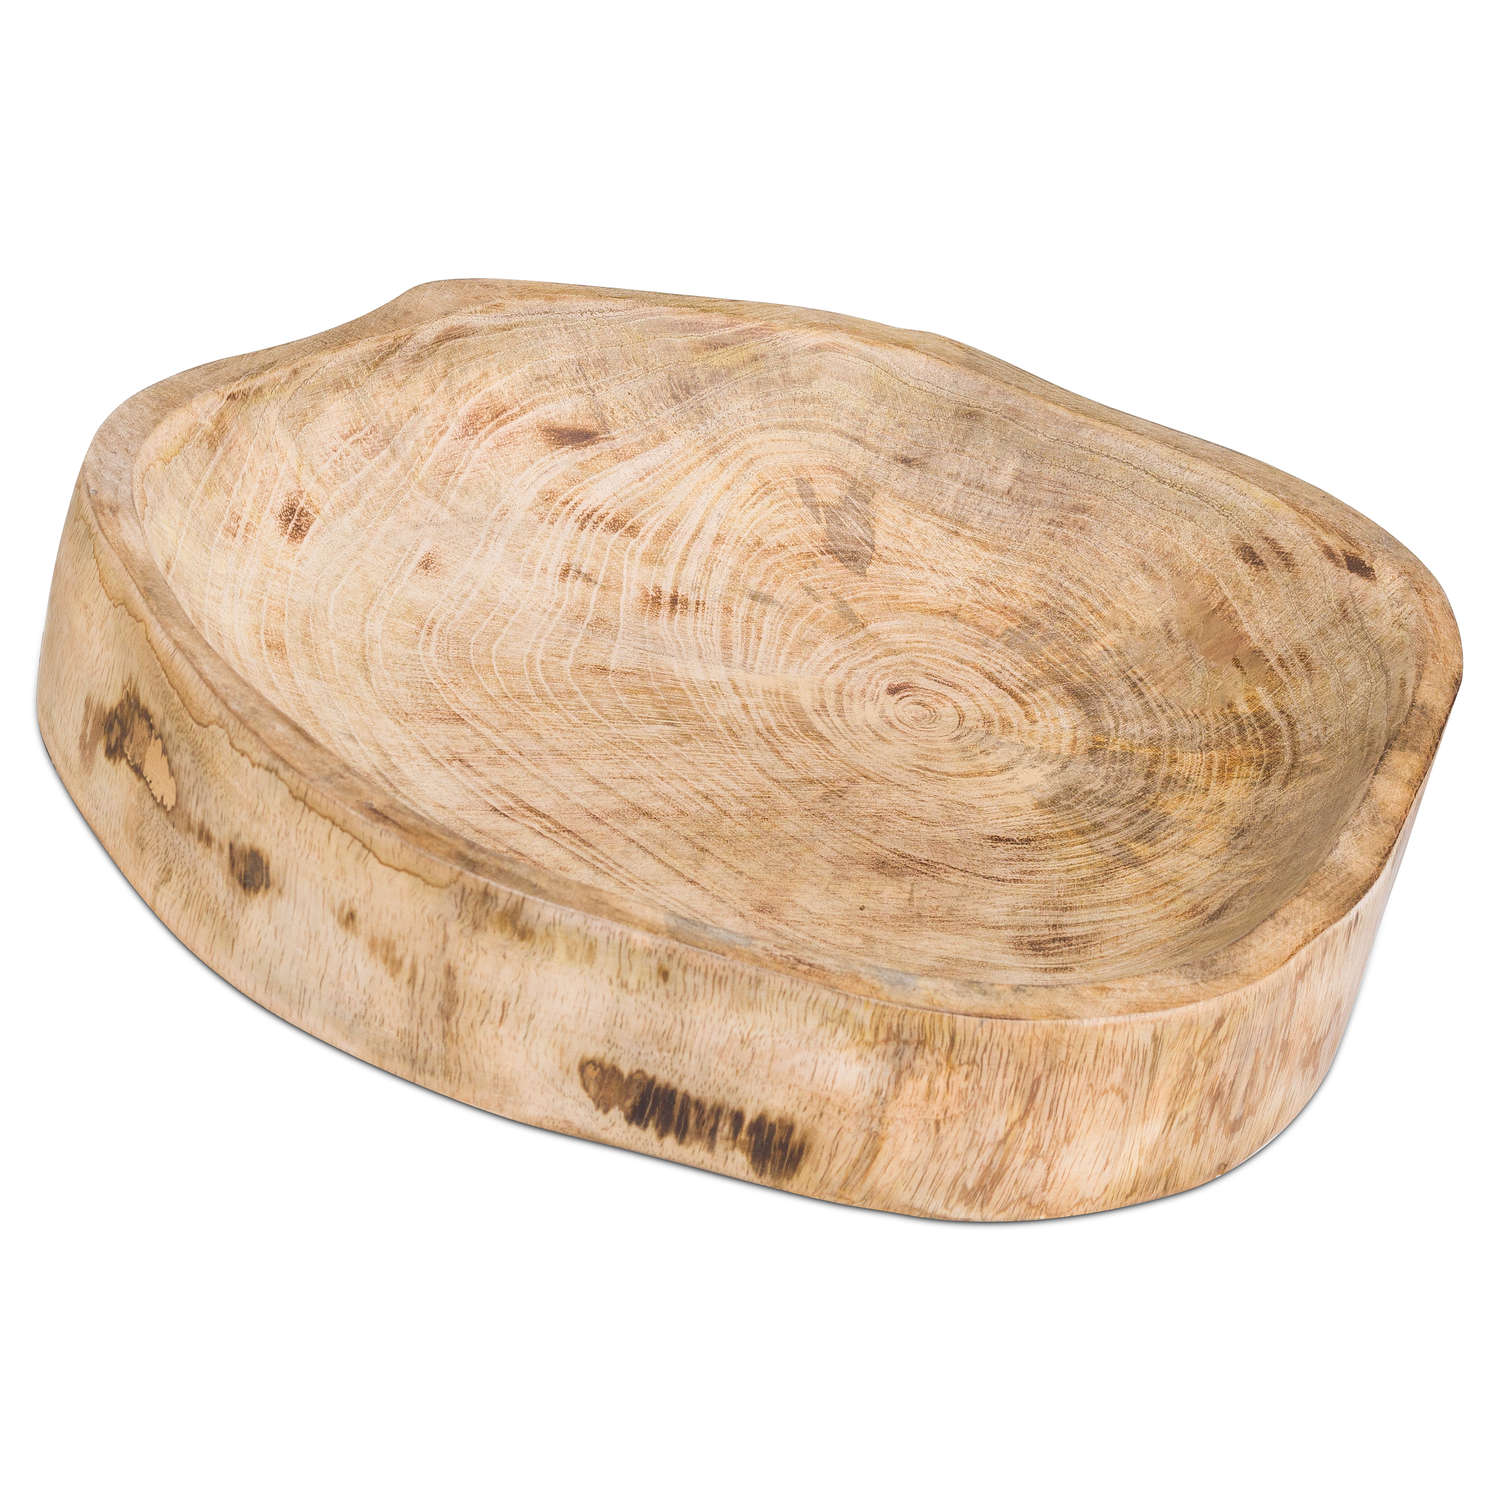 Hand Crafted Mango Wood Bowl - Image 1